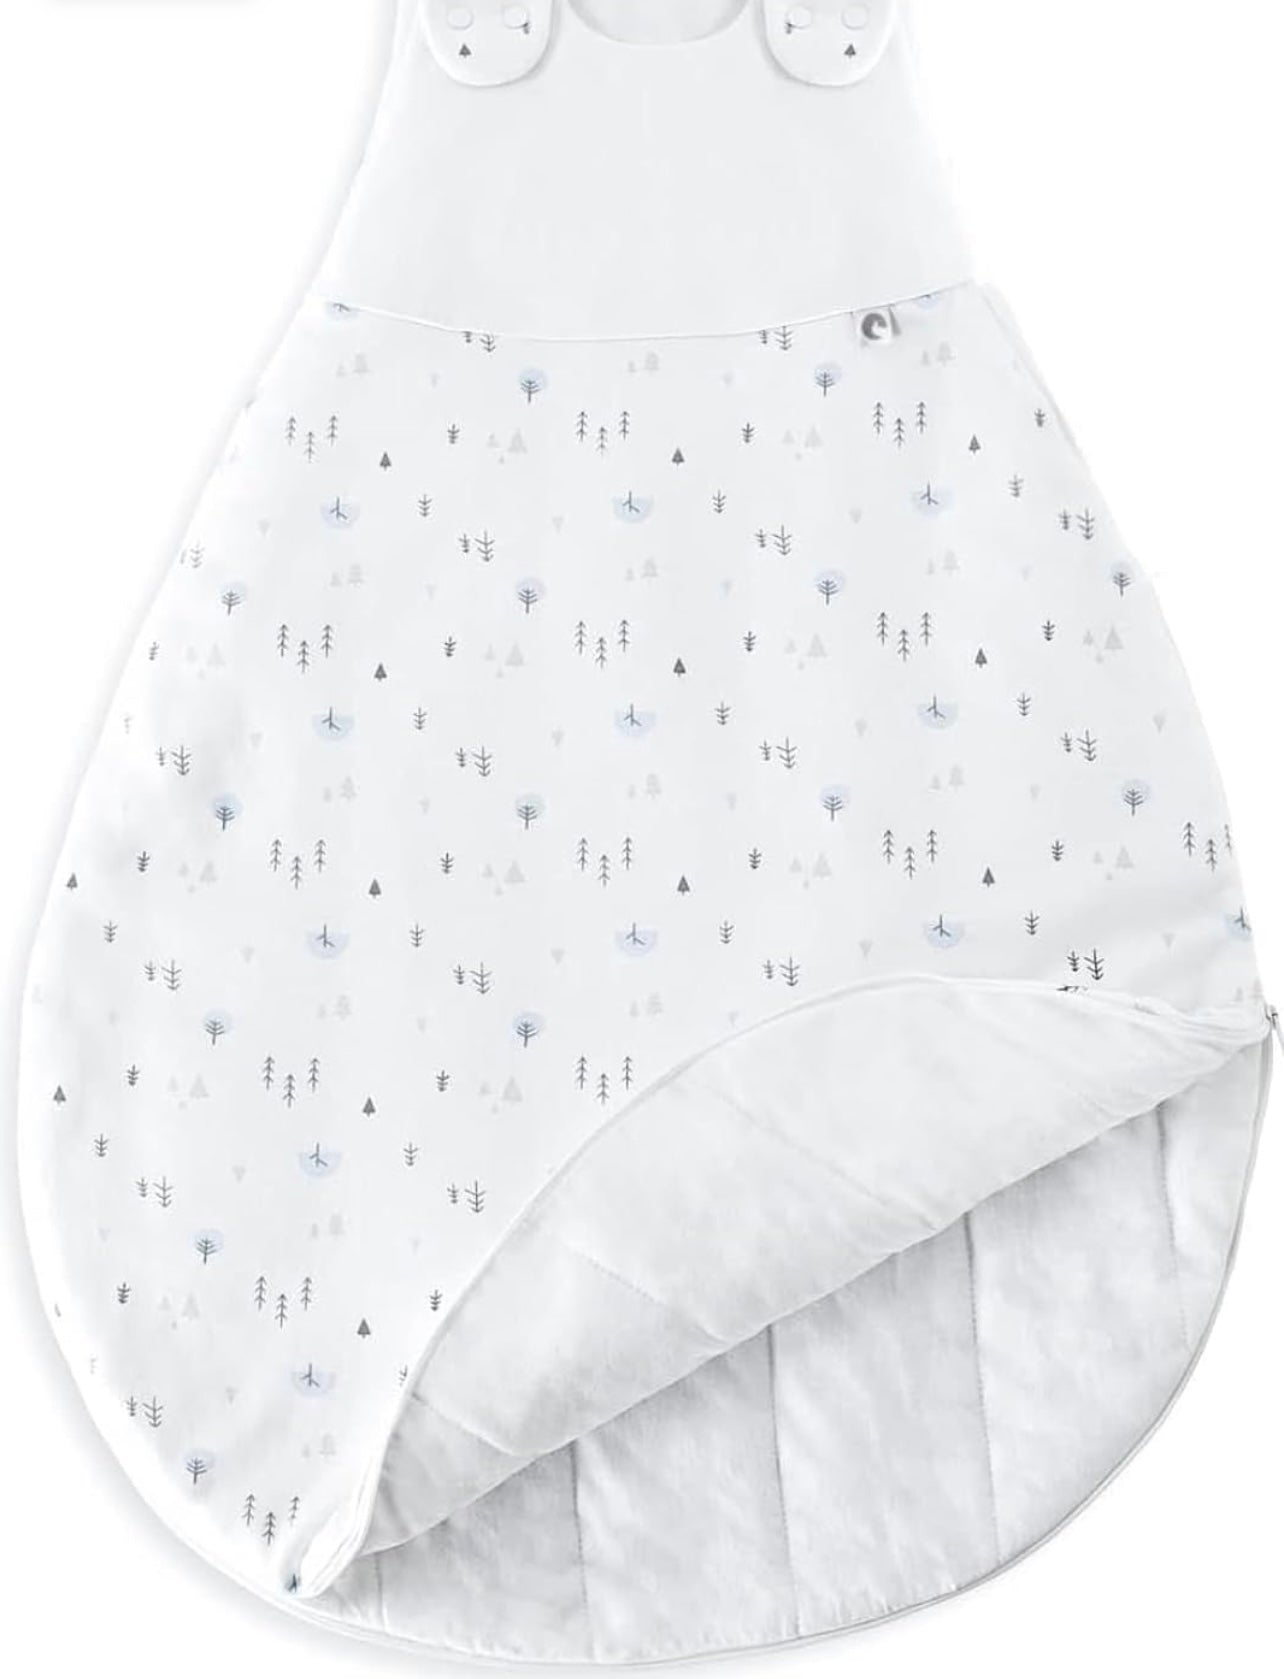 Trekki Saco de dormir acolchado de algodón, saco de dormir de 2.5 tog de peso, 12-36 meses